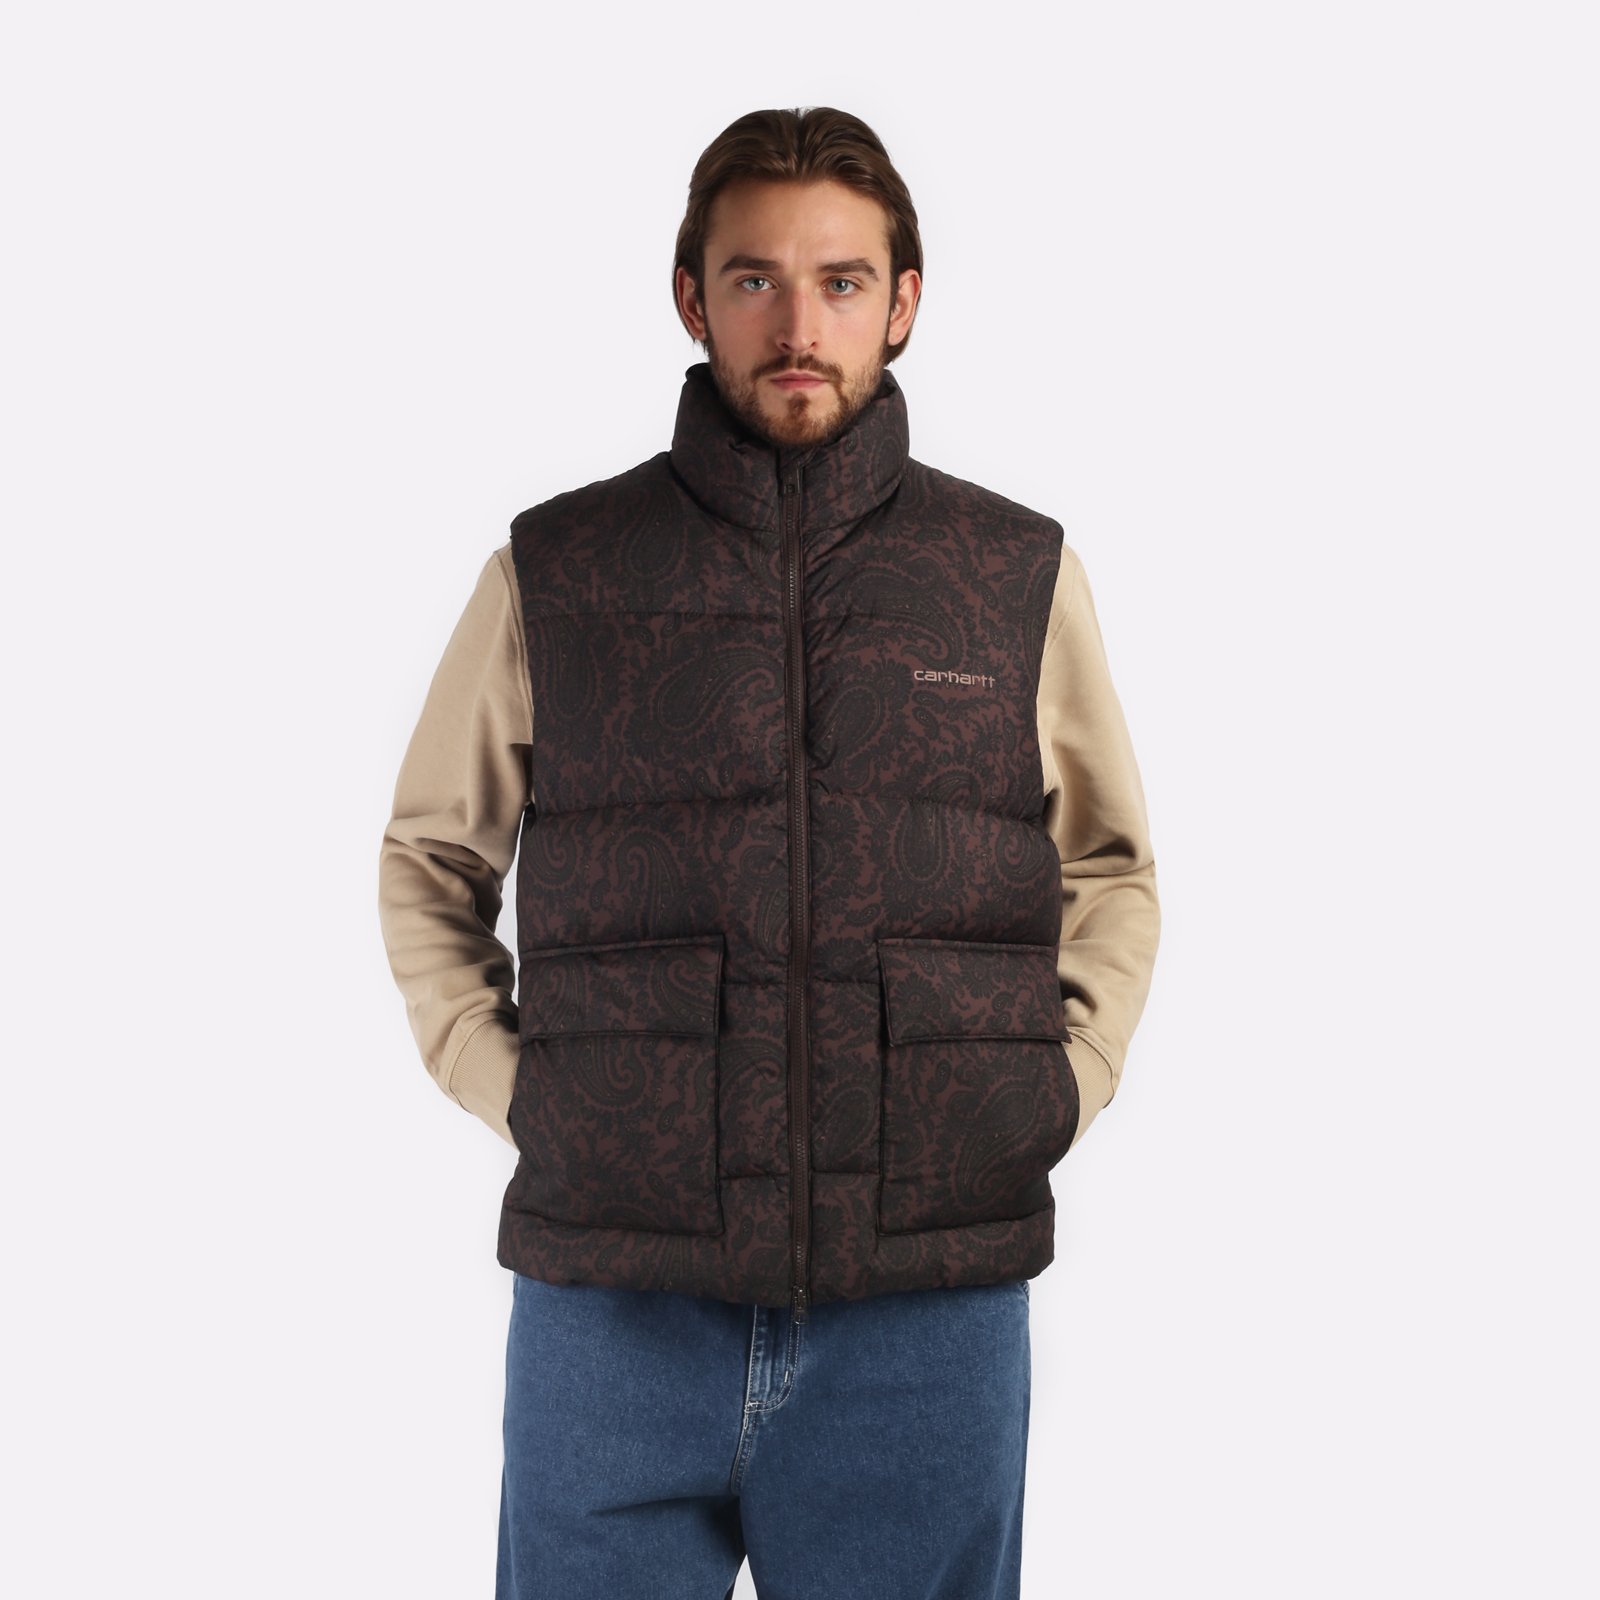 мужской жилет Carhartt WIP Springfield Vest  (I032265-buckeye/black)  - цена, описание, фото 1